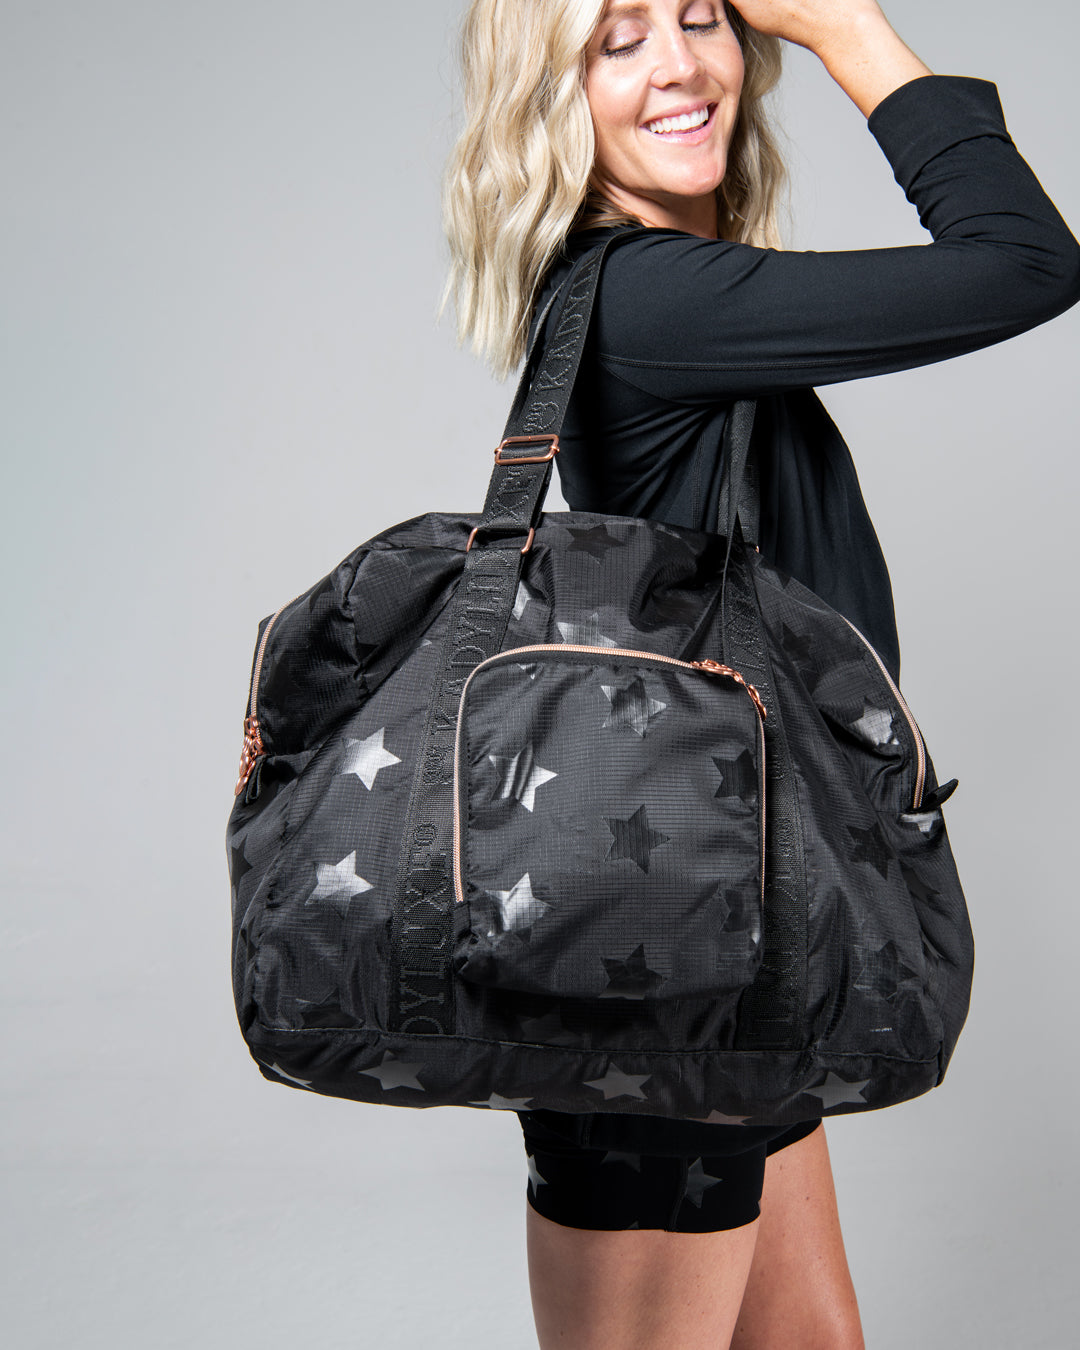 KADYLUXE® packable travel bag in black star print.